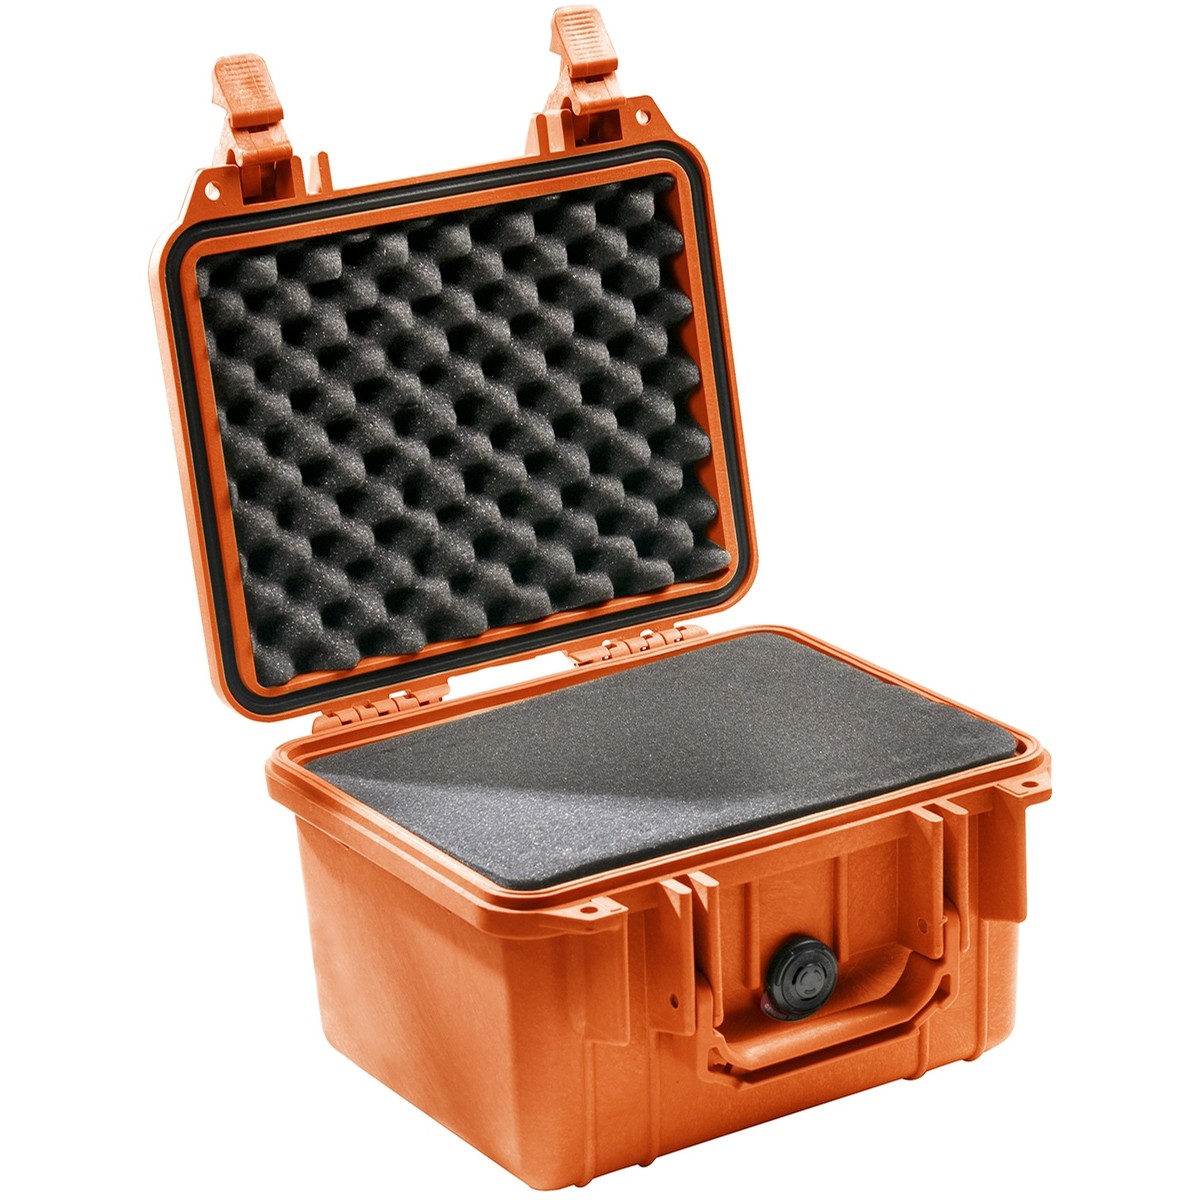 https://www.companybe.com/DownRiverEquipment/product_photos/rd_images/rd_pelican-orange-camera-waterproof-case2.jpg